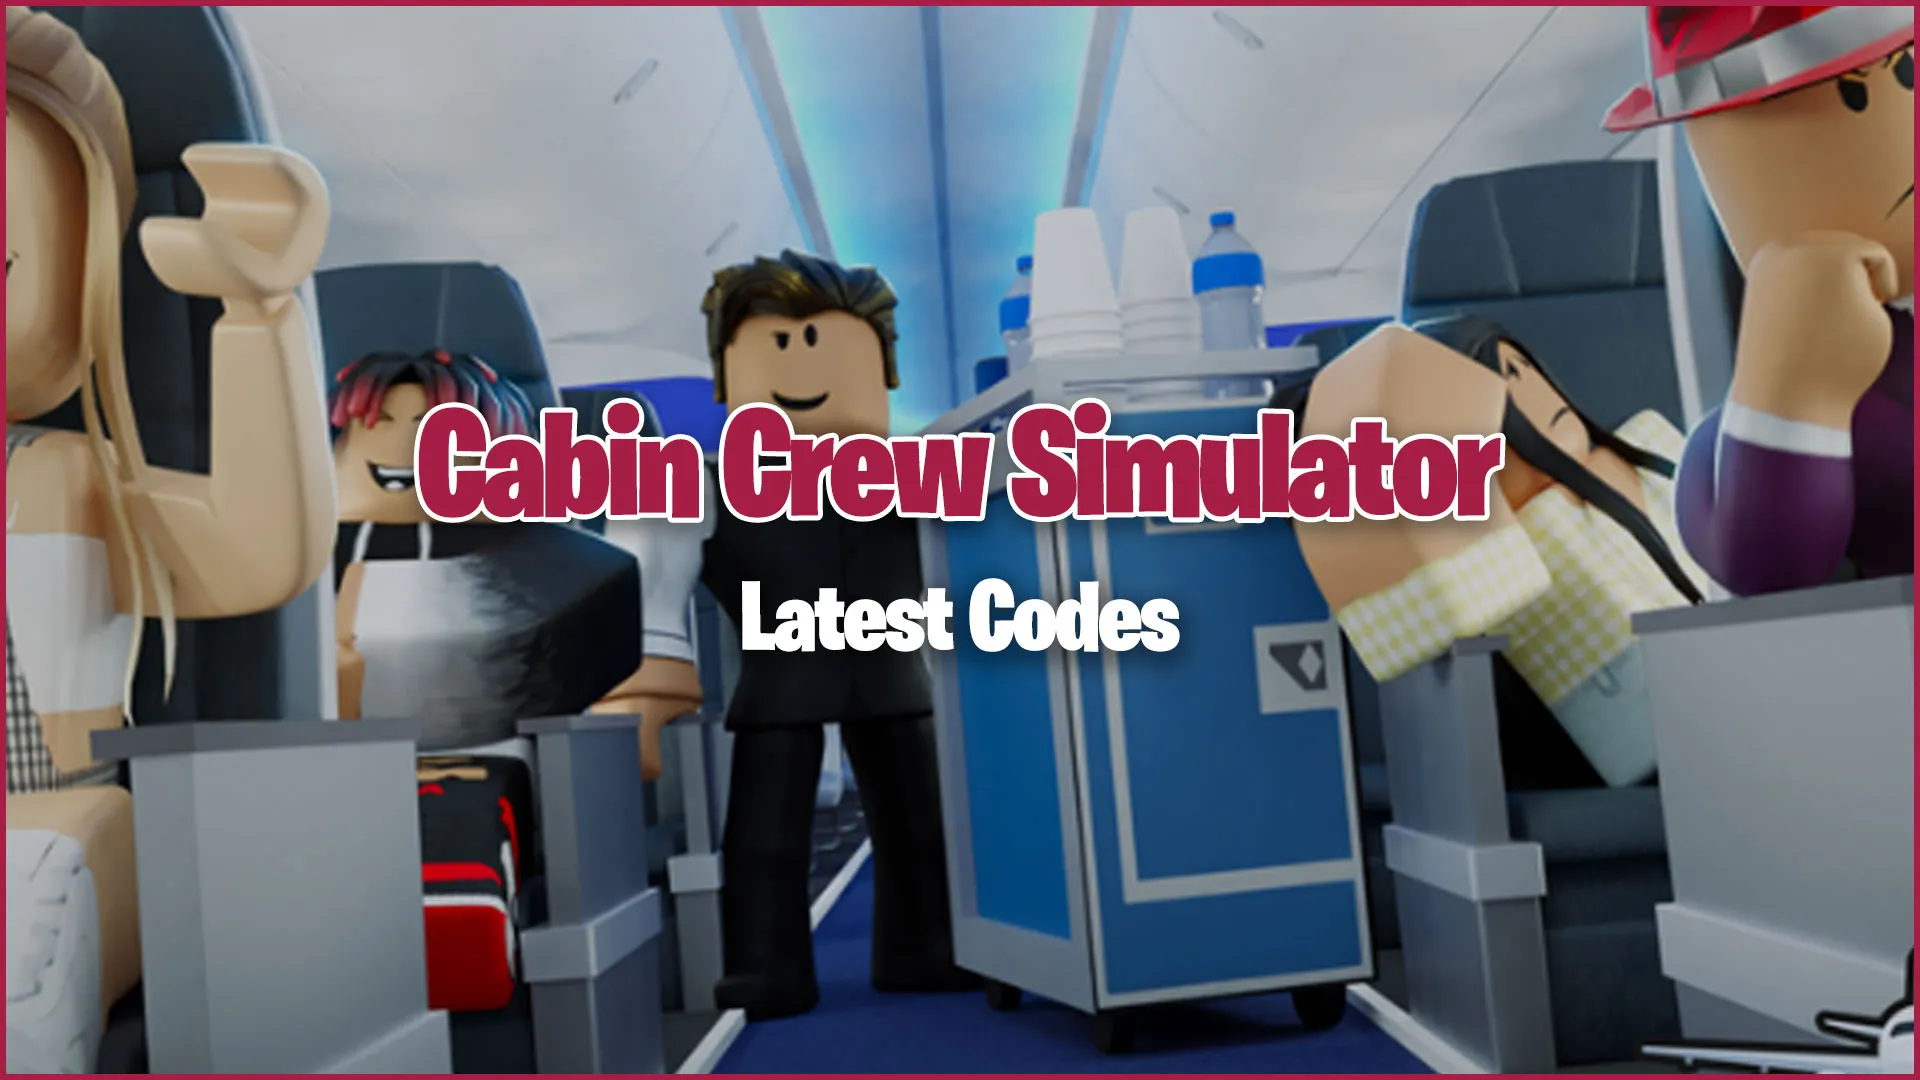 roblox-cabin-crew-simulator-codes-january-2022-pro-game-guides